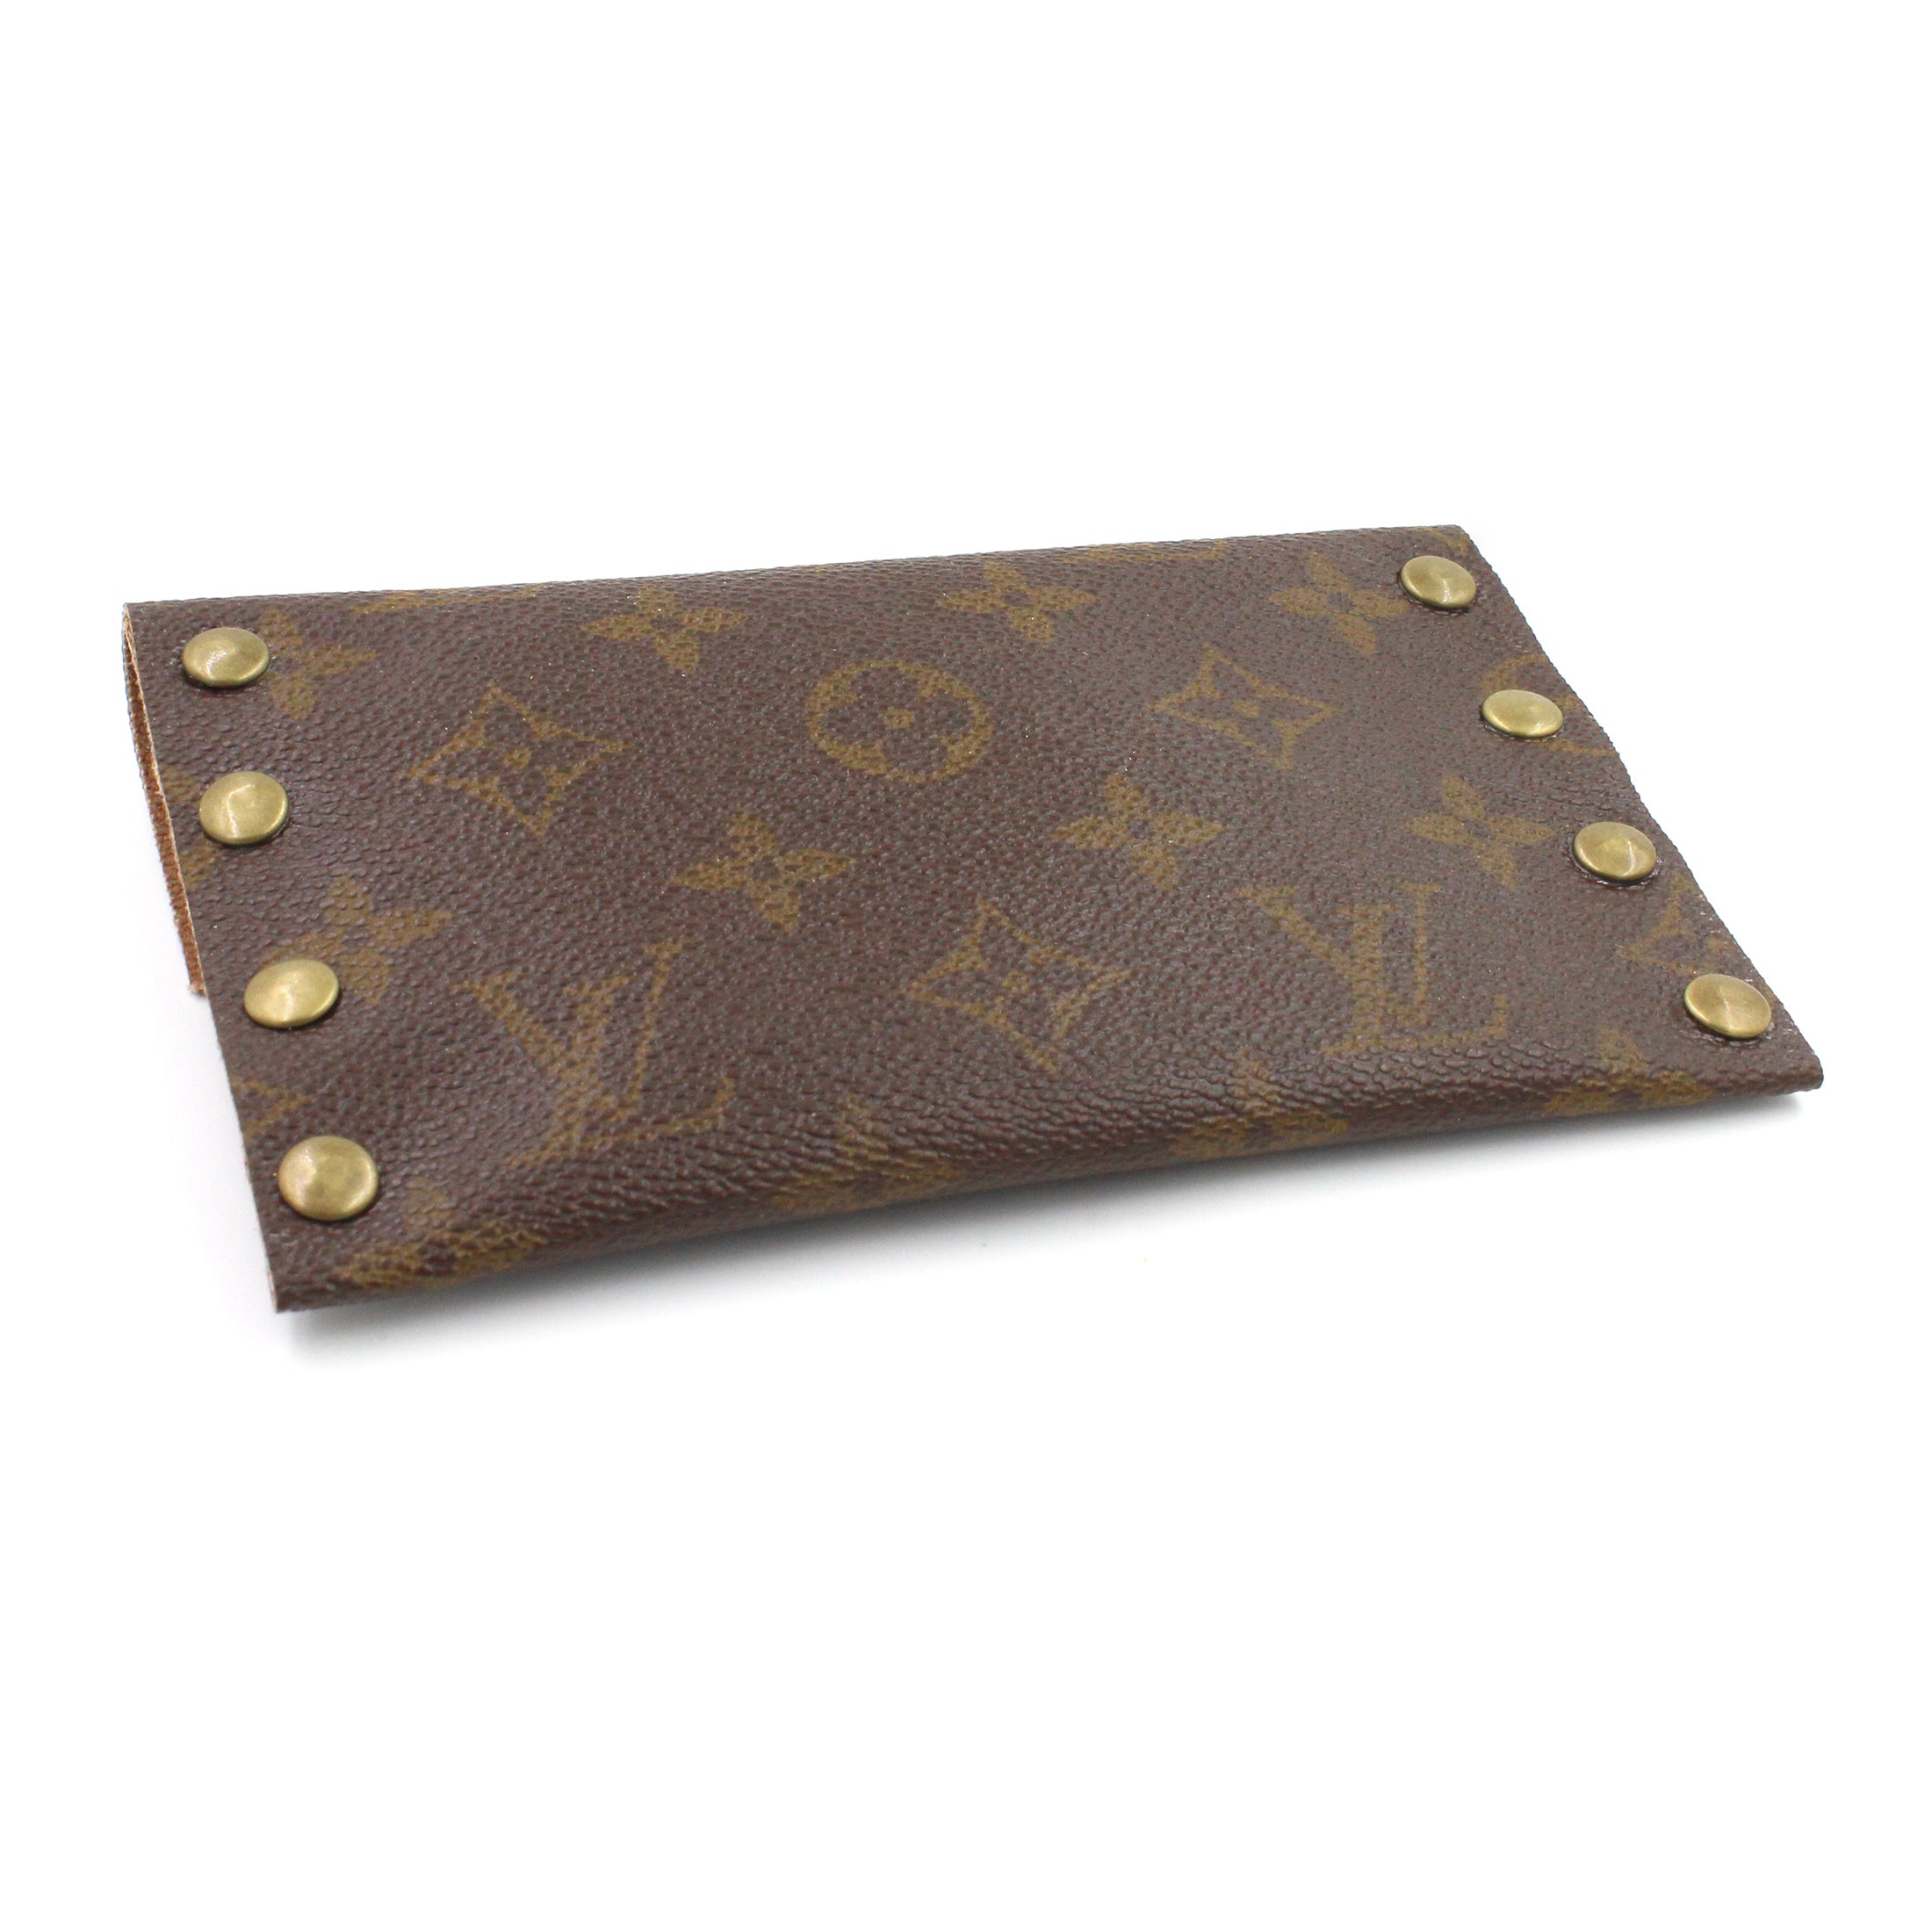 Repurposed Louis Vuitton Leather Wallet